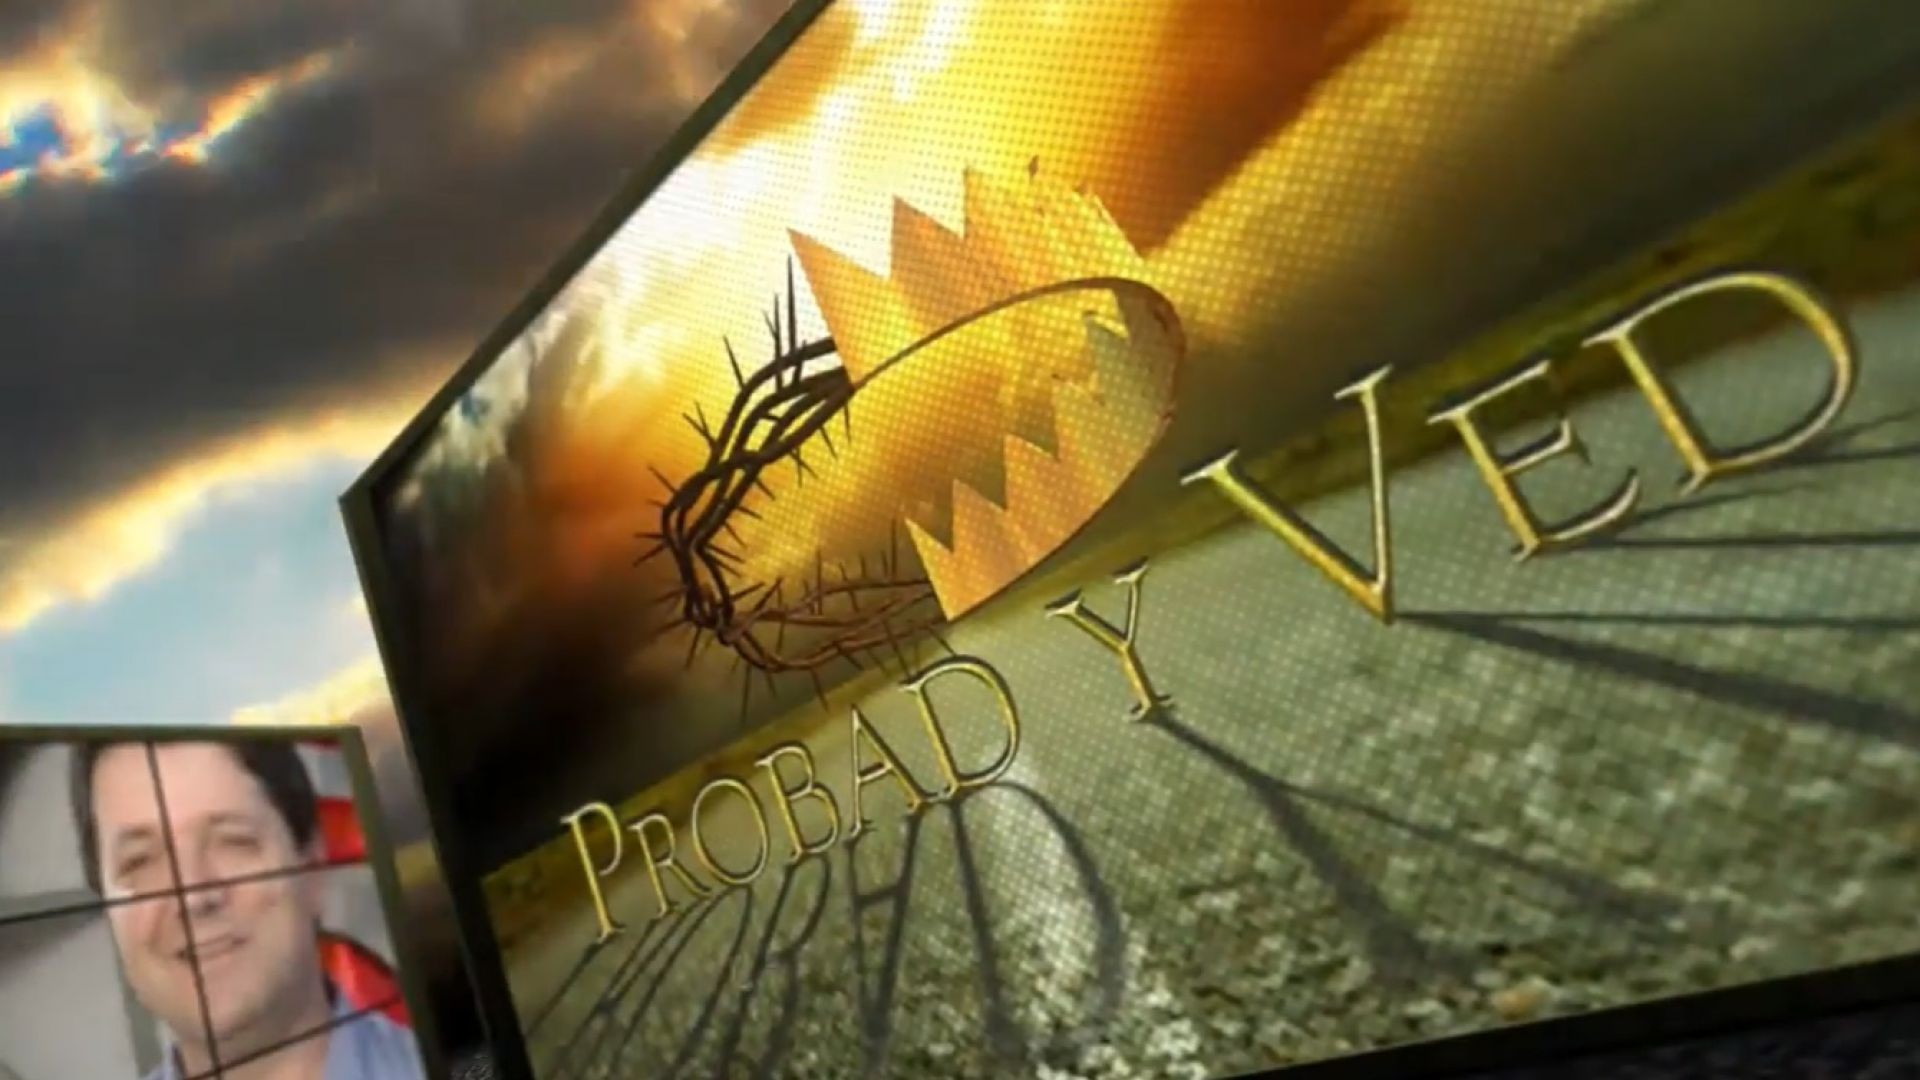 ⁣Probad y Ved 2012 - Milagros del siglo XXI